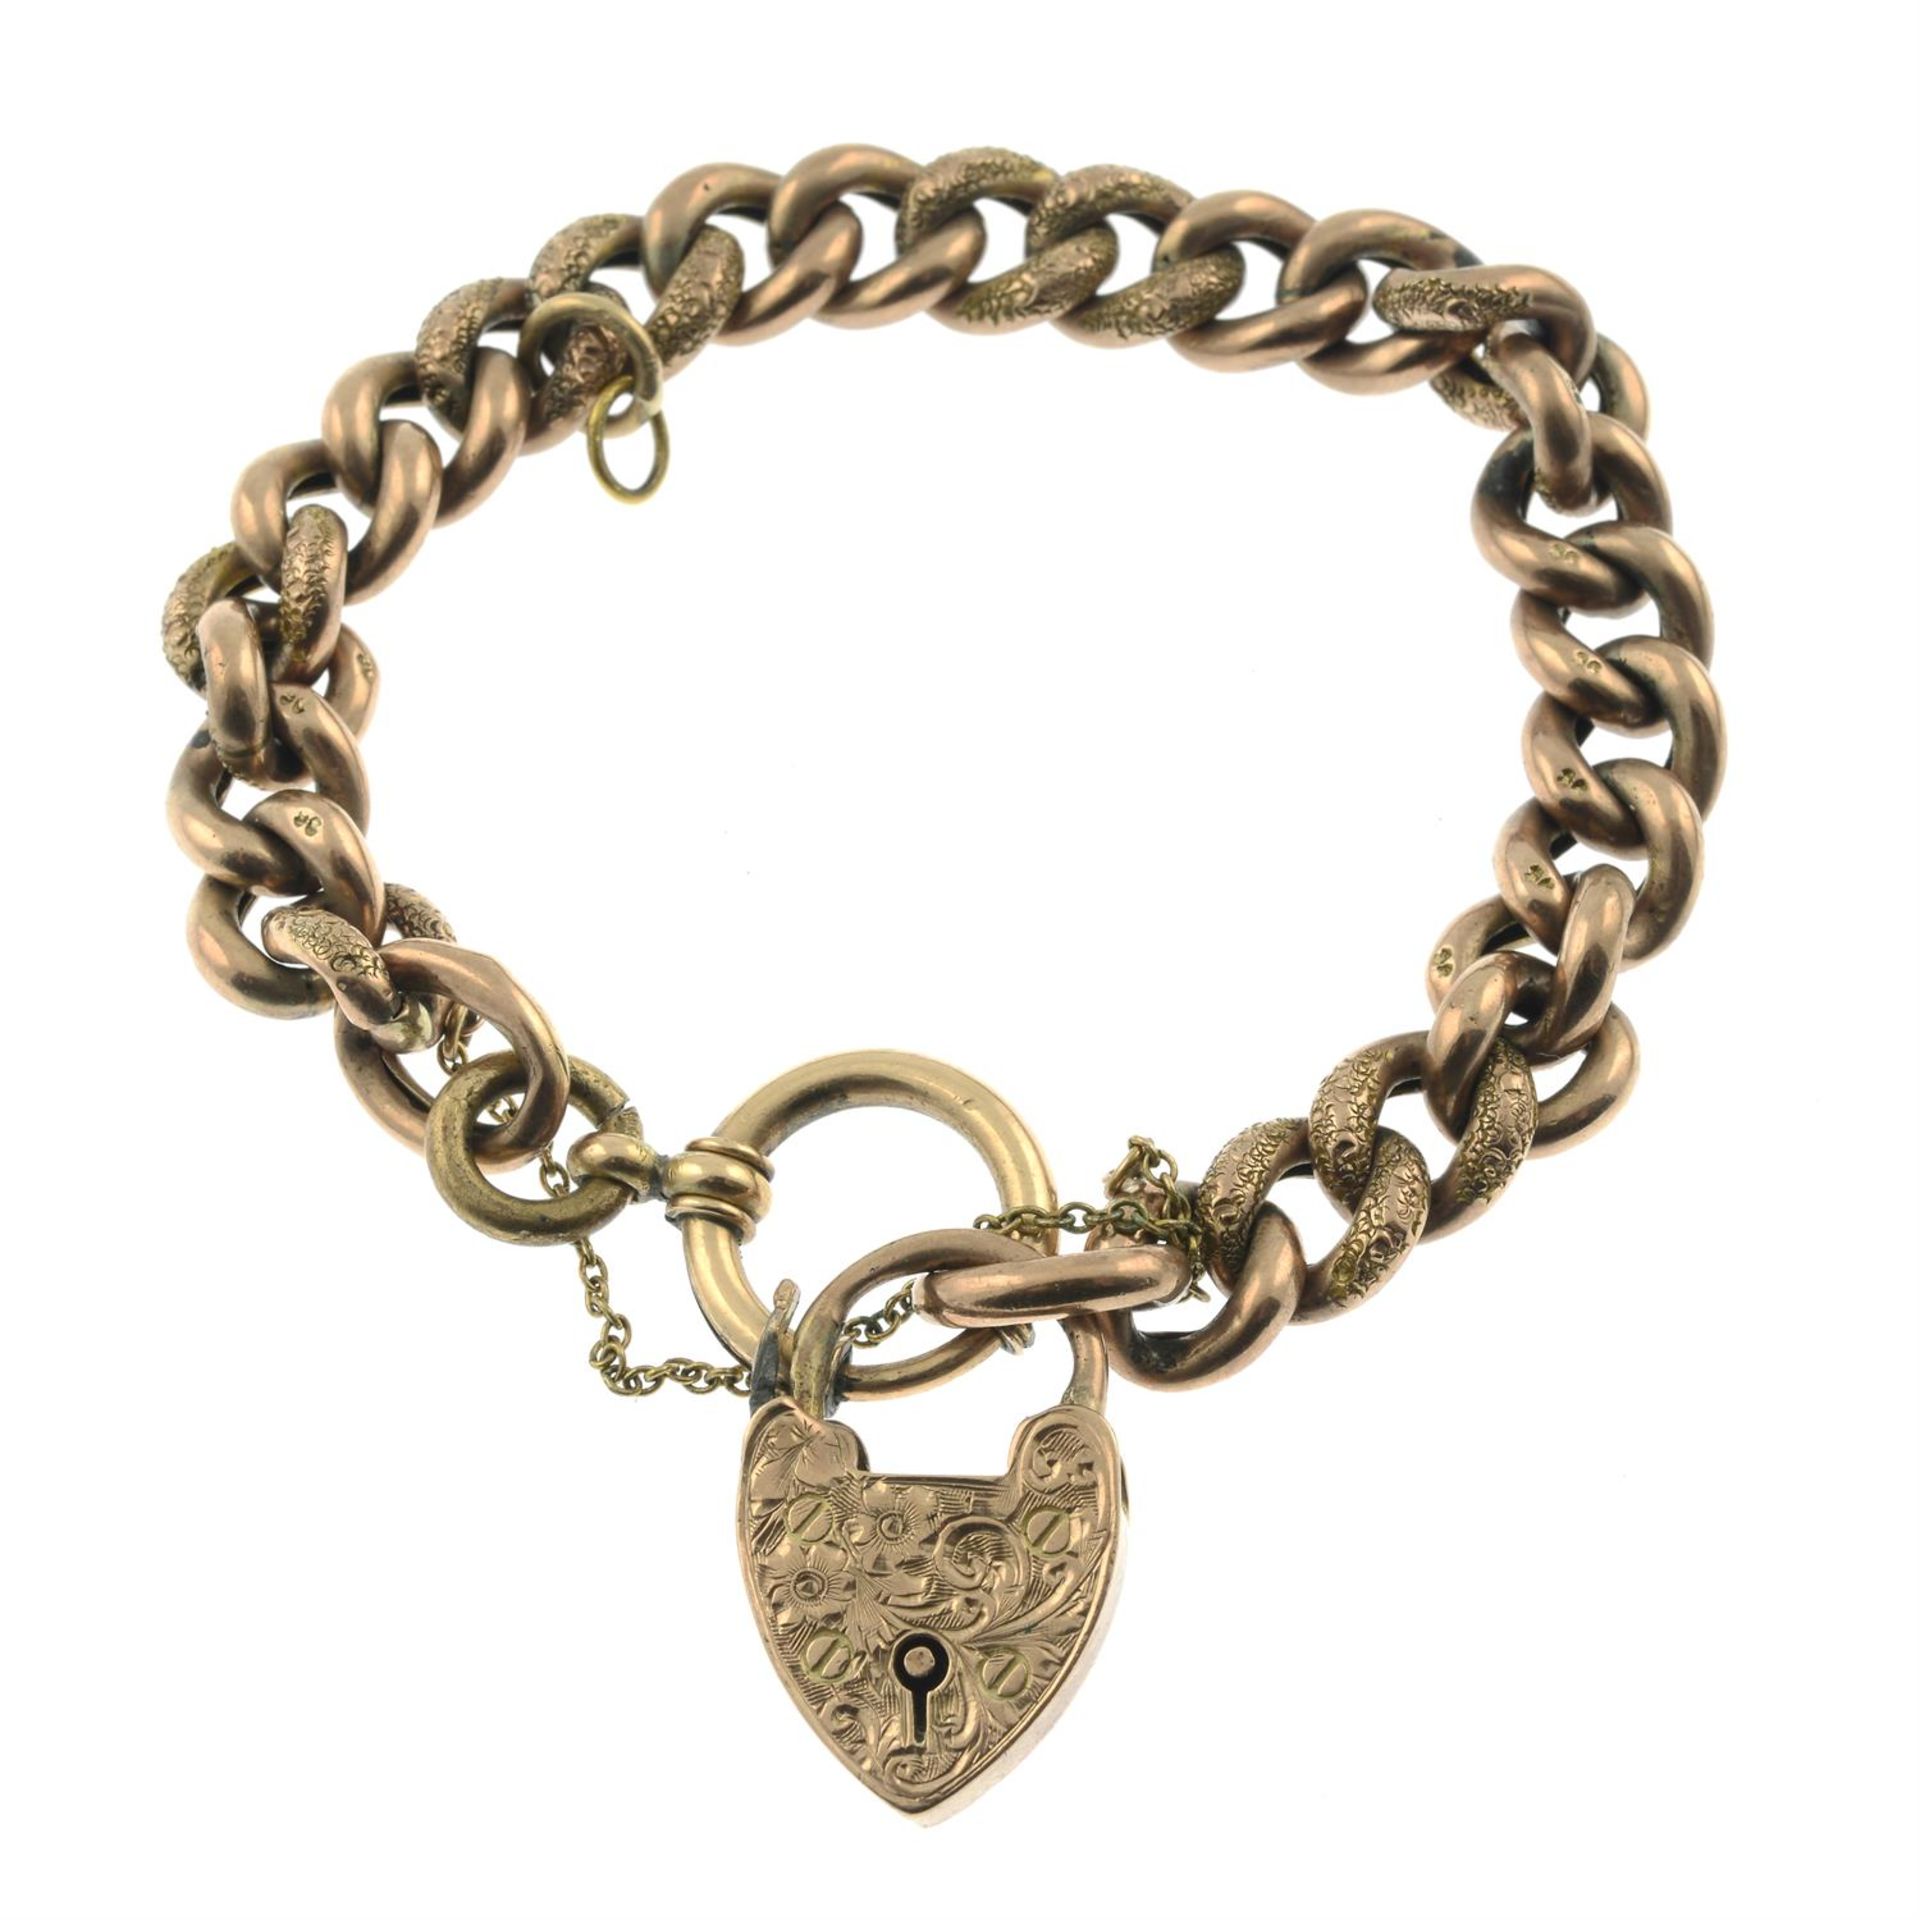 A late 19th century charm bracelet, suspending a heart-shape padlock charm.